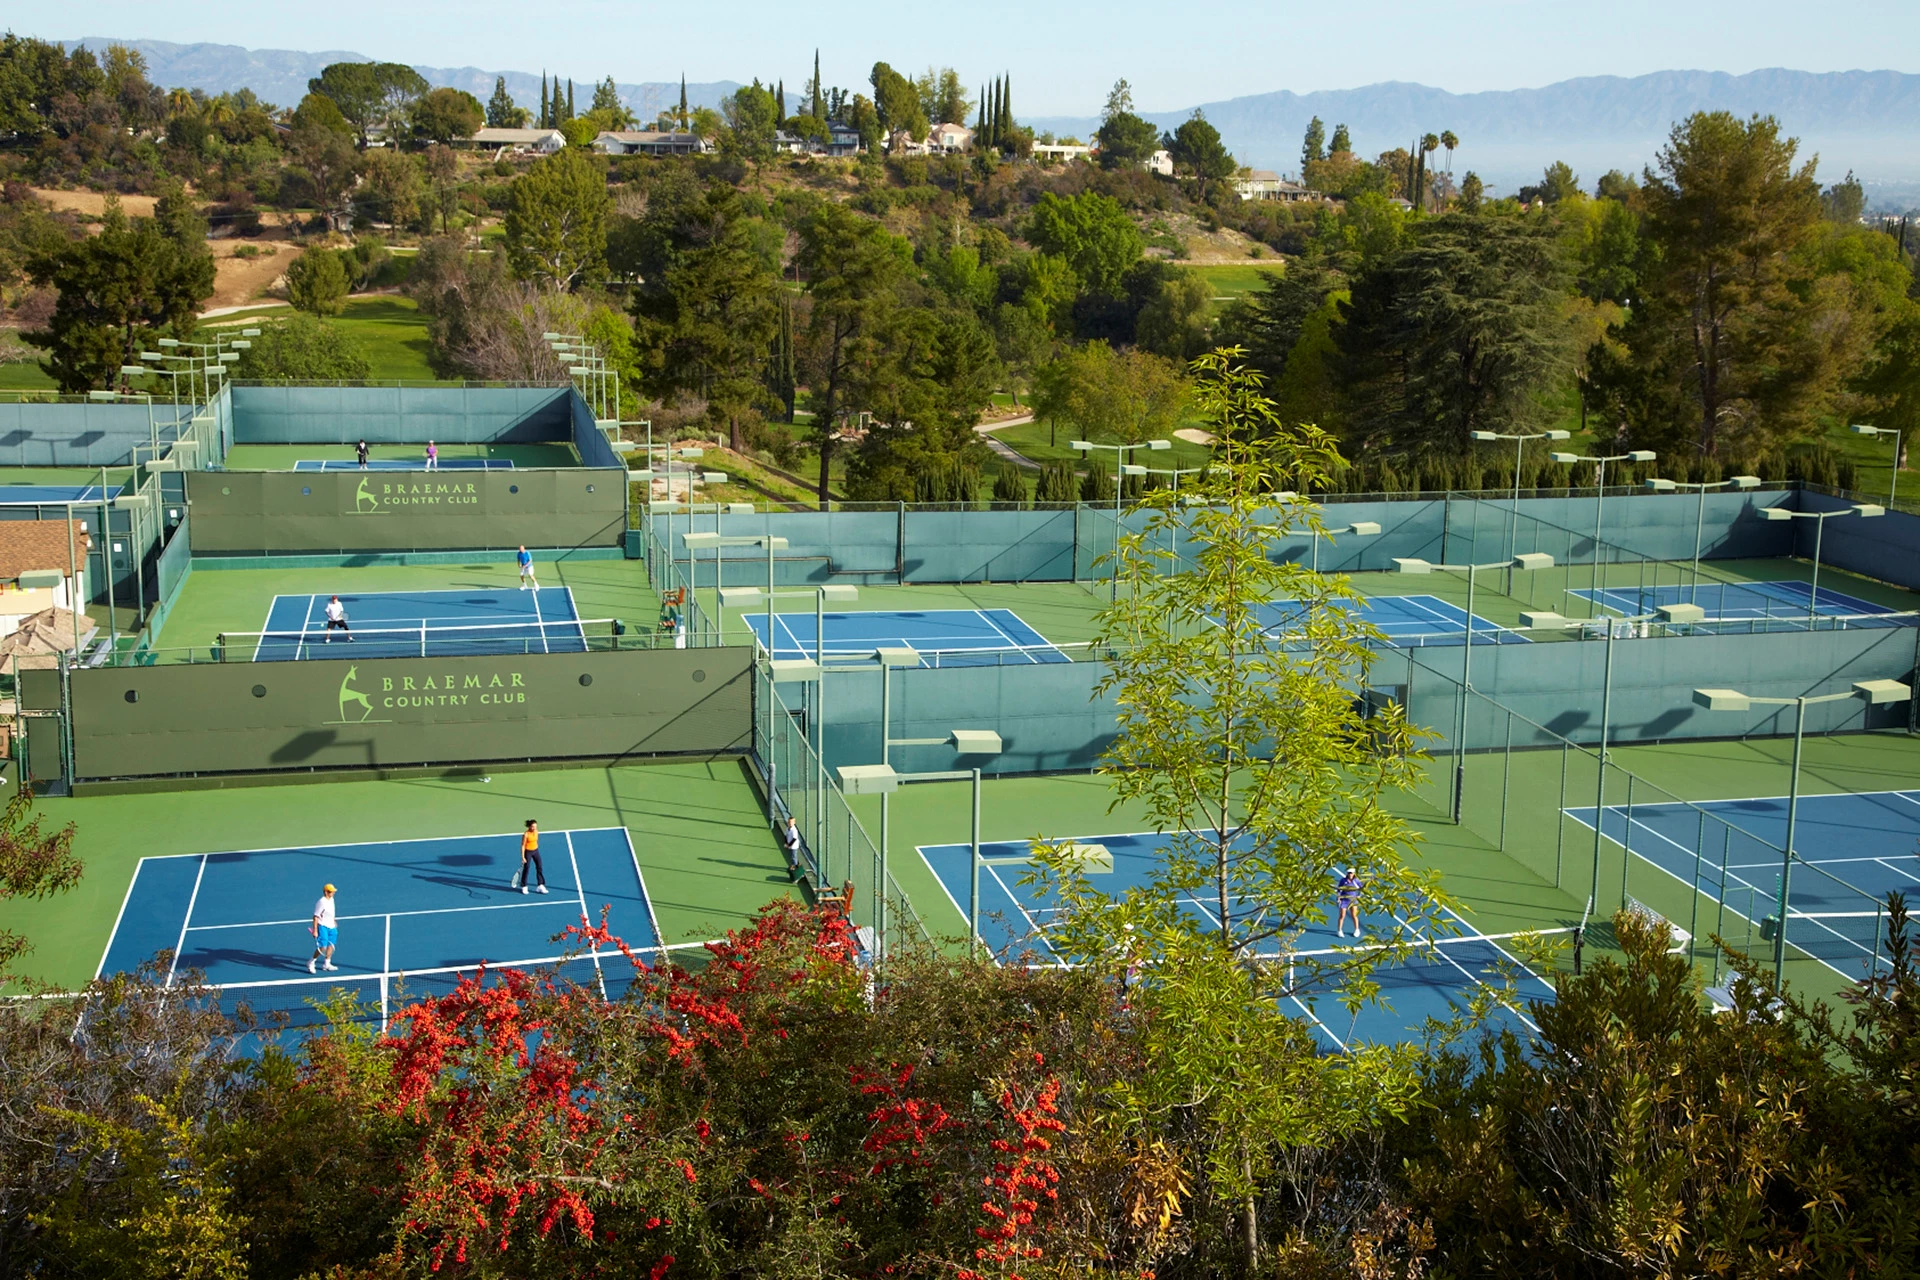 Braemar Country Club - Tennis Courts